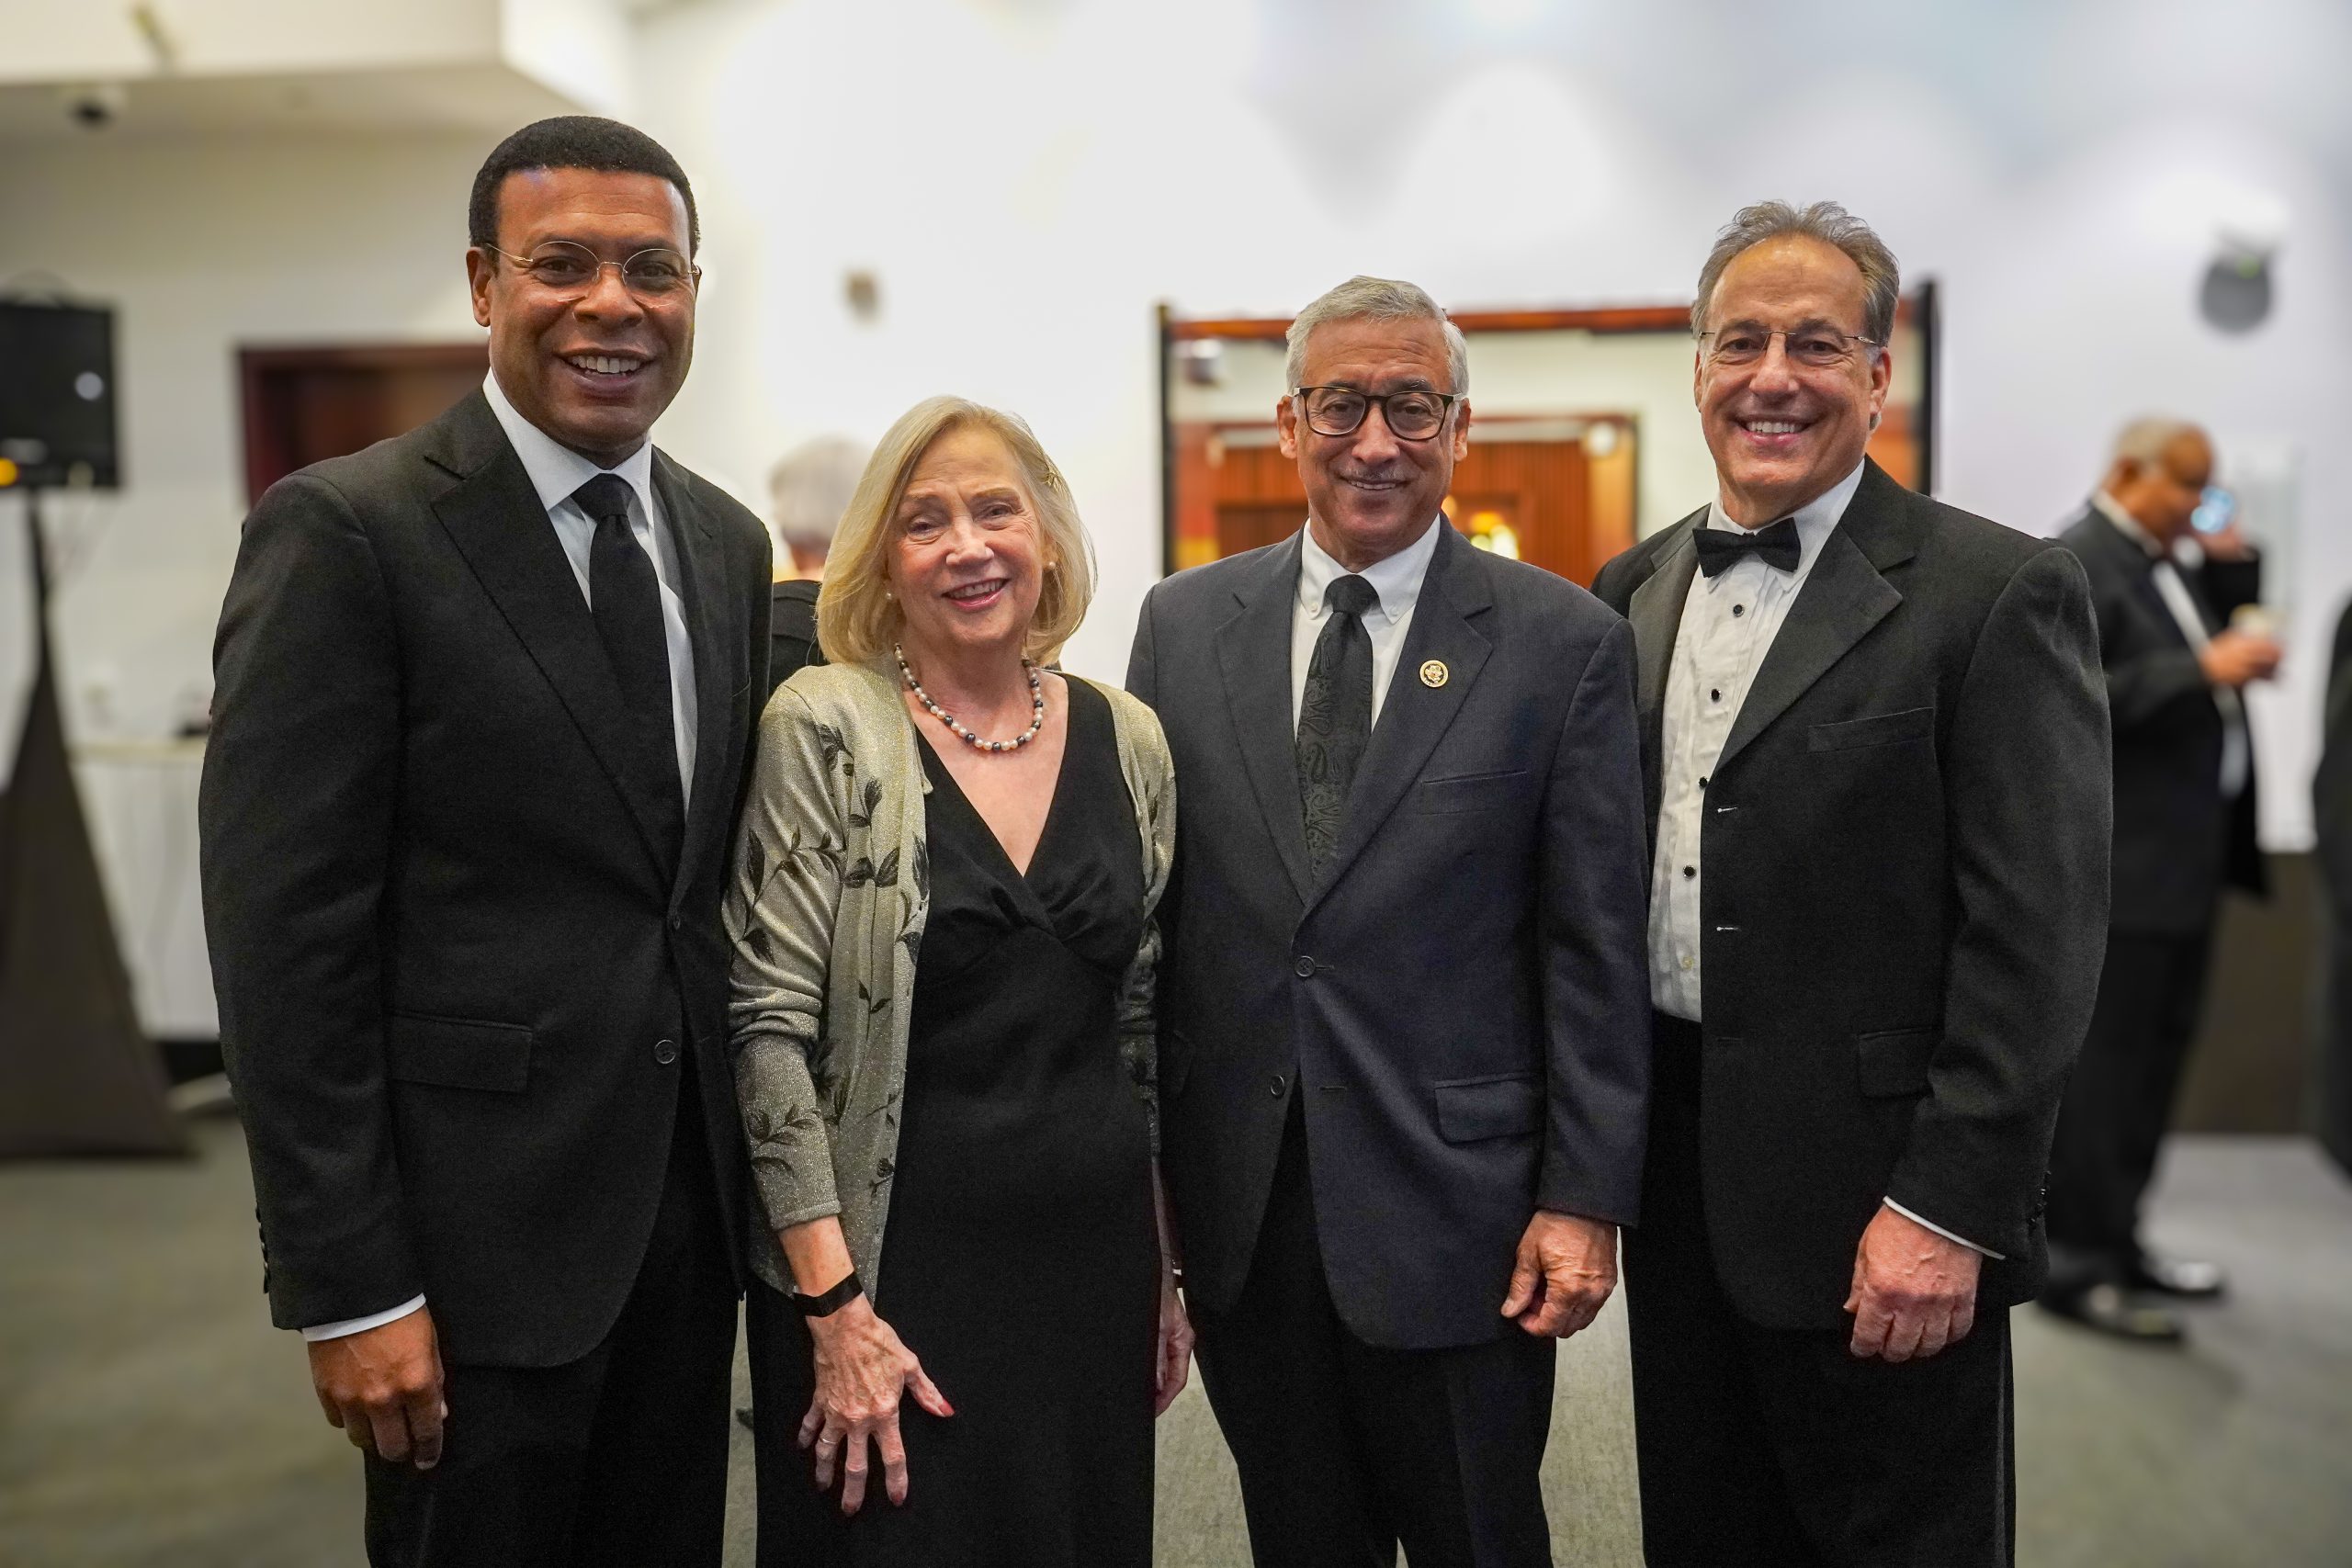 group photo with mayor alexander, board president thelma drake, congressman bobby scott, and ceo steve zollos